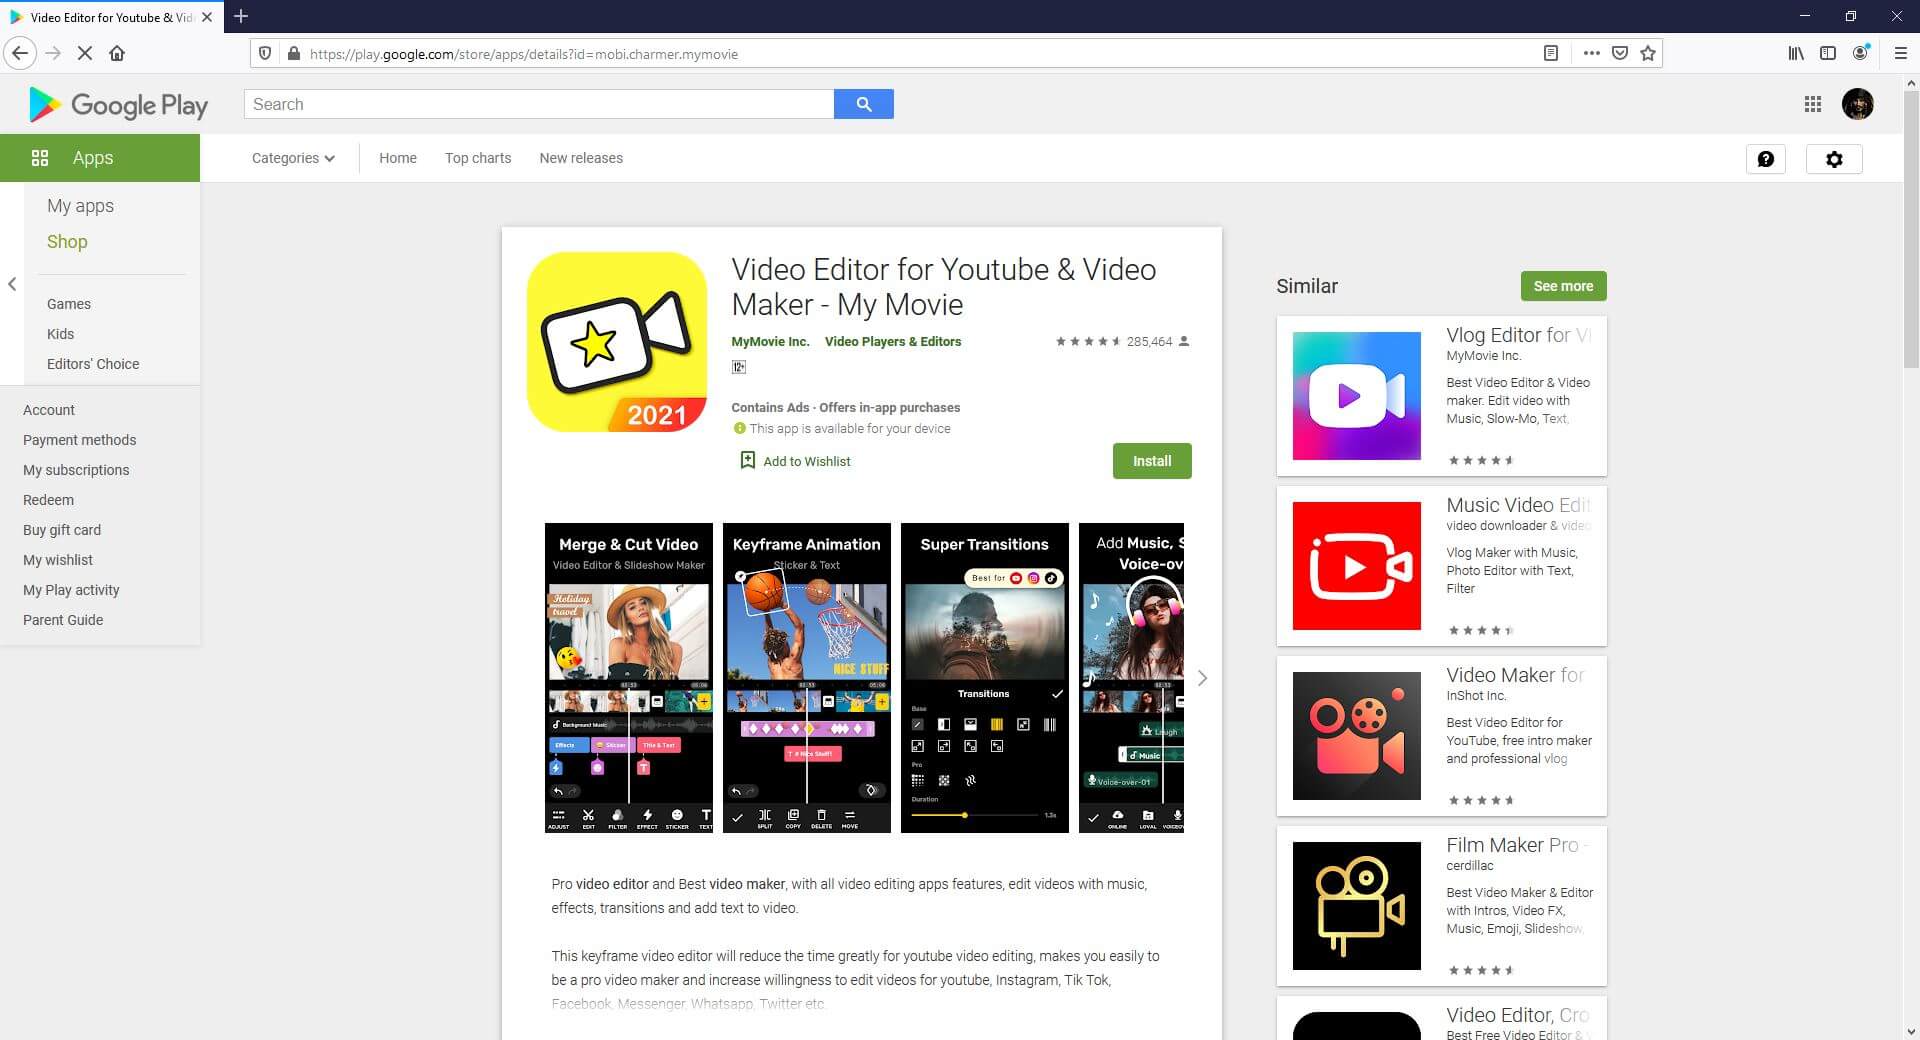 YouTube Shorts Video Editing app: My Movie